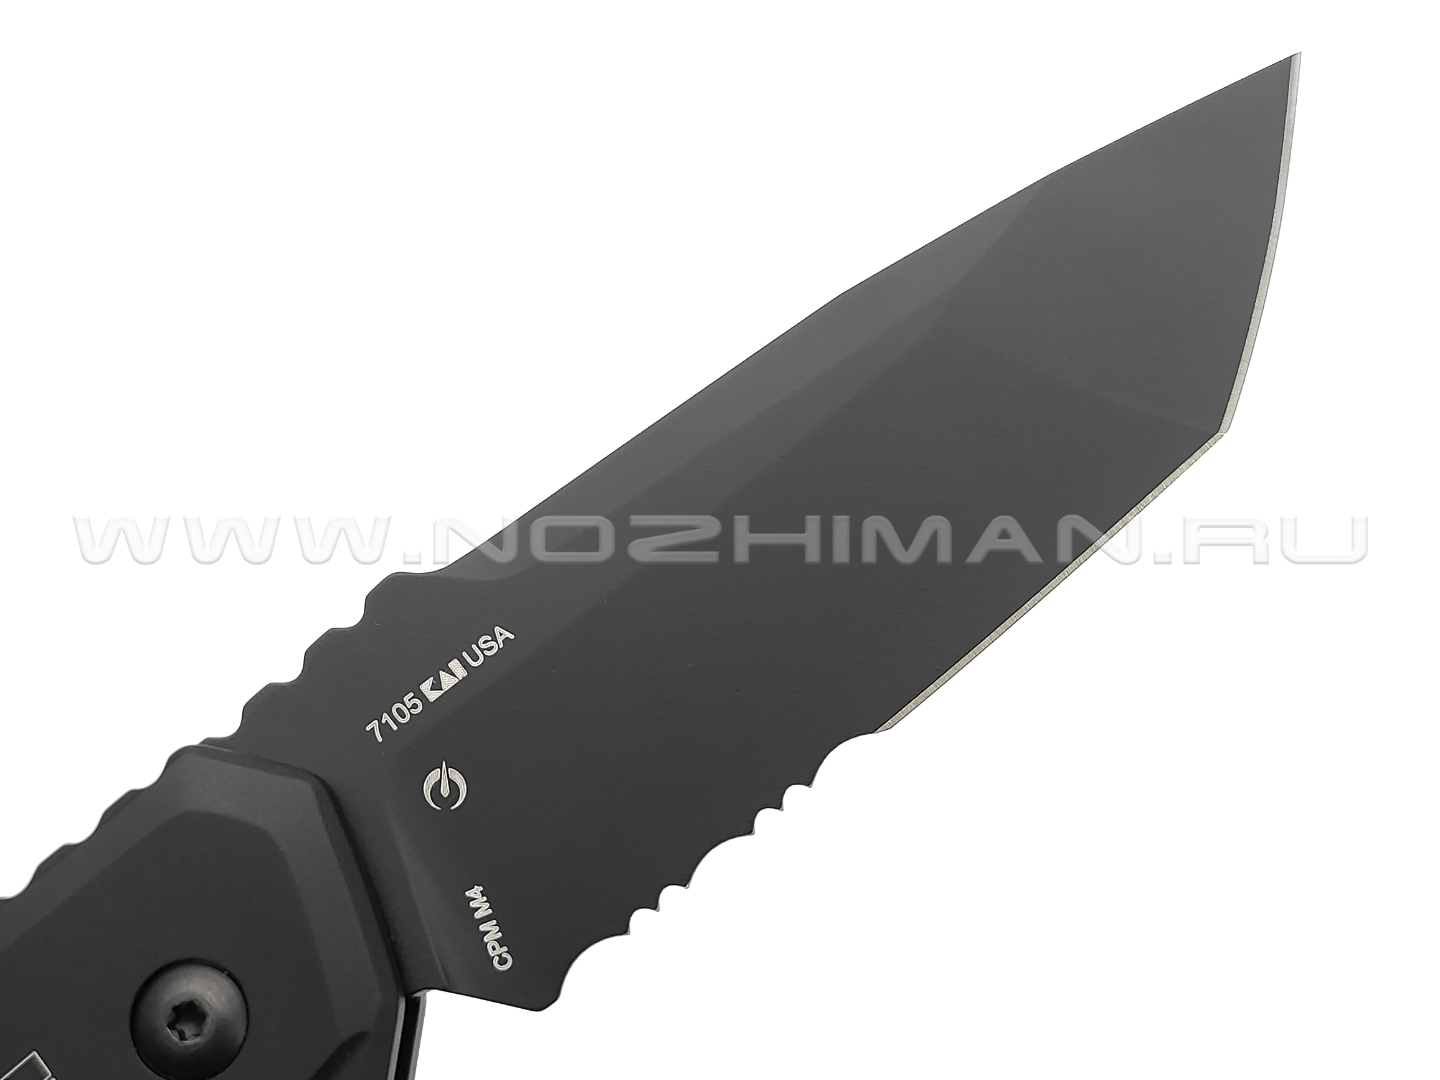 Нож Kershaw Launch 16 7105 сталь CPM M4 Cerakote, рукоять 6061-T6 Aluminium, Trac-Tec